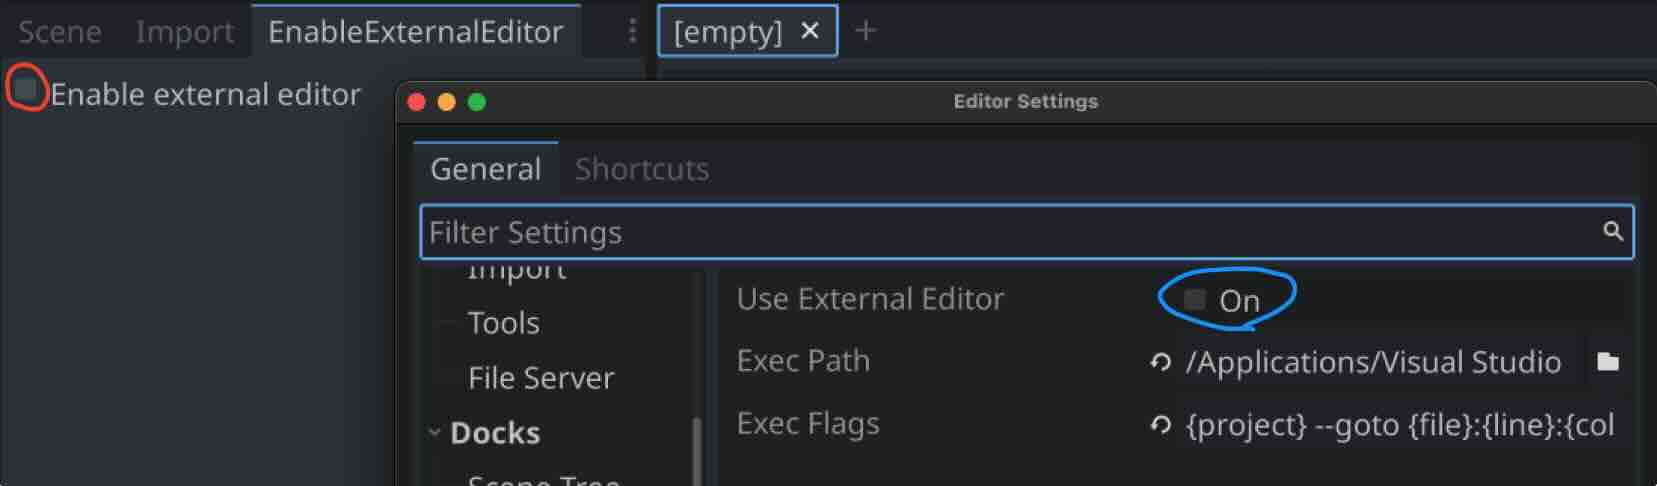 enable exteranl editor screenshot